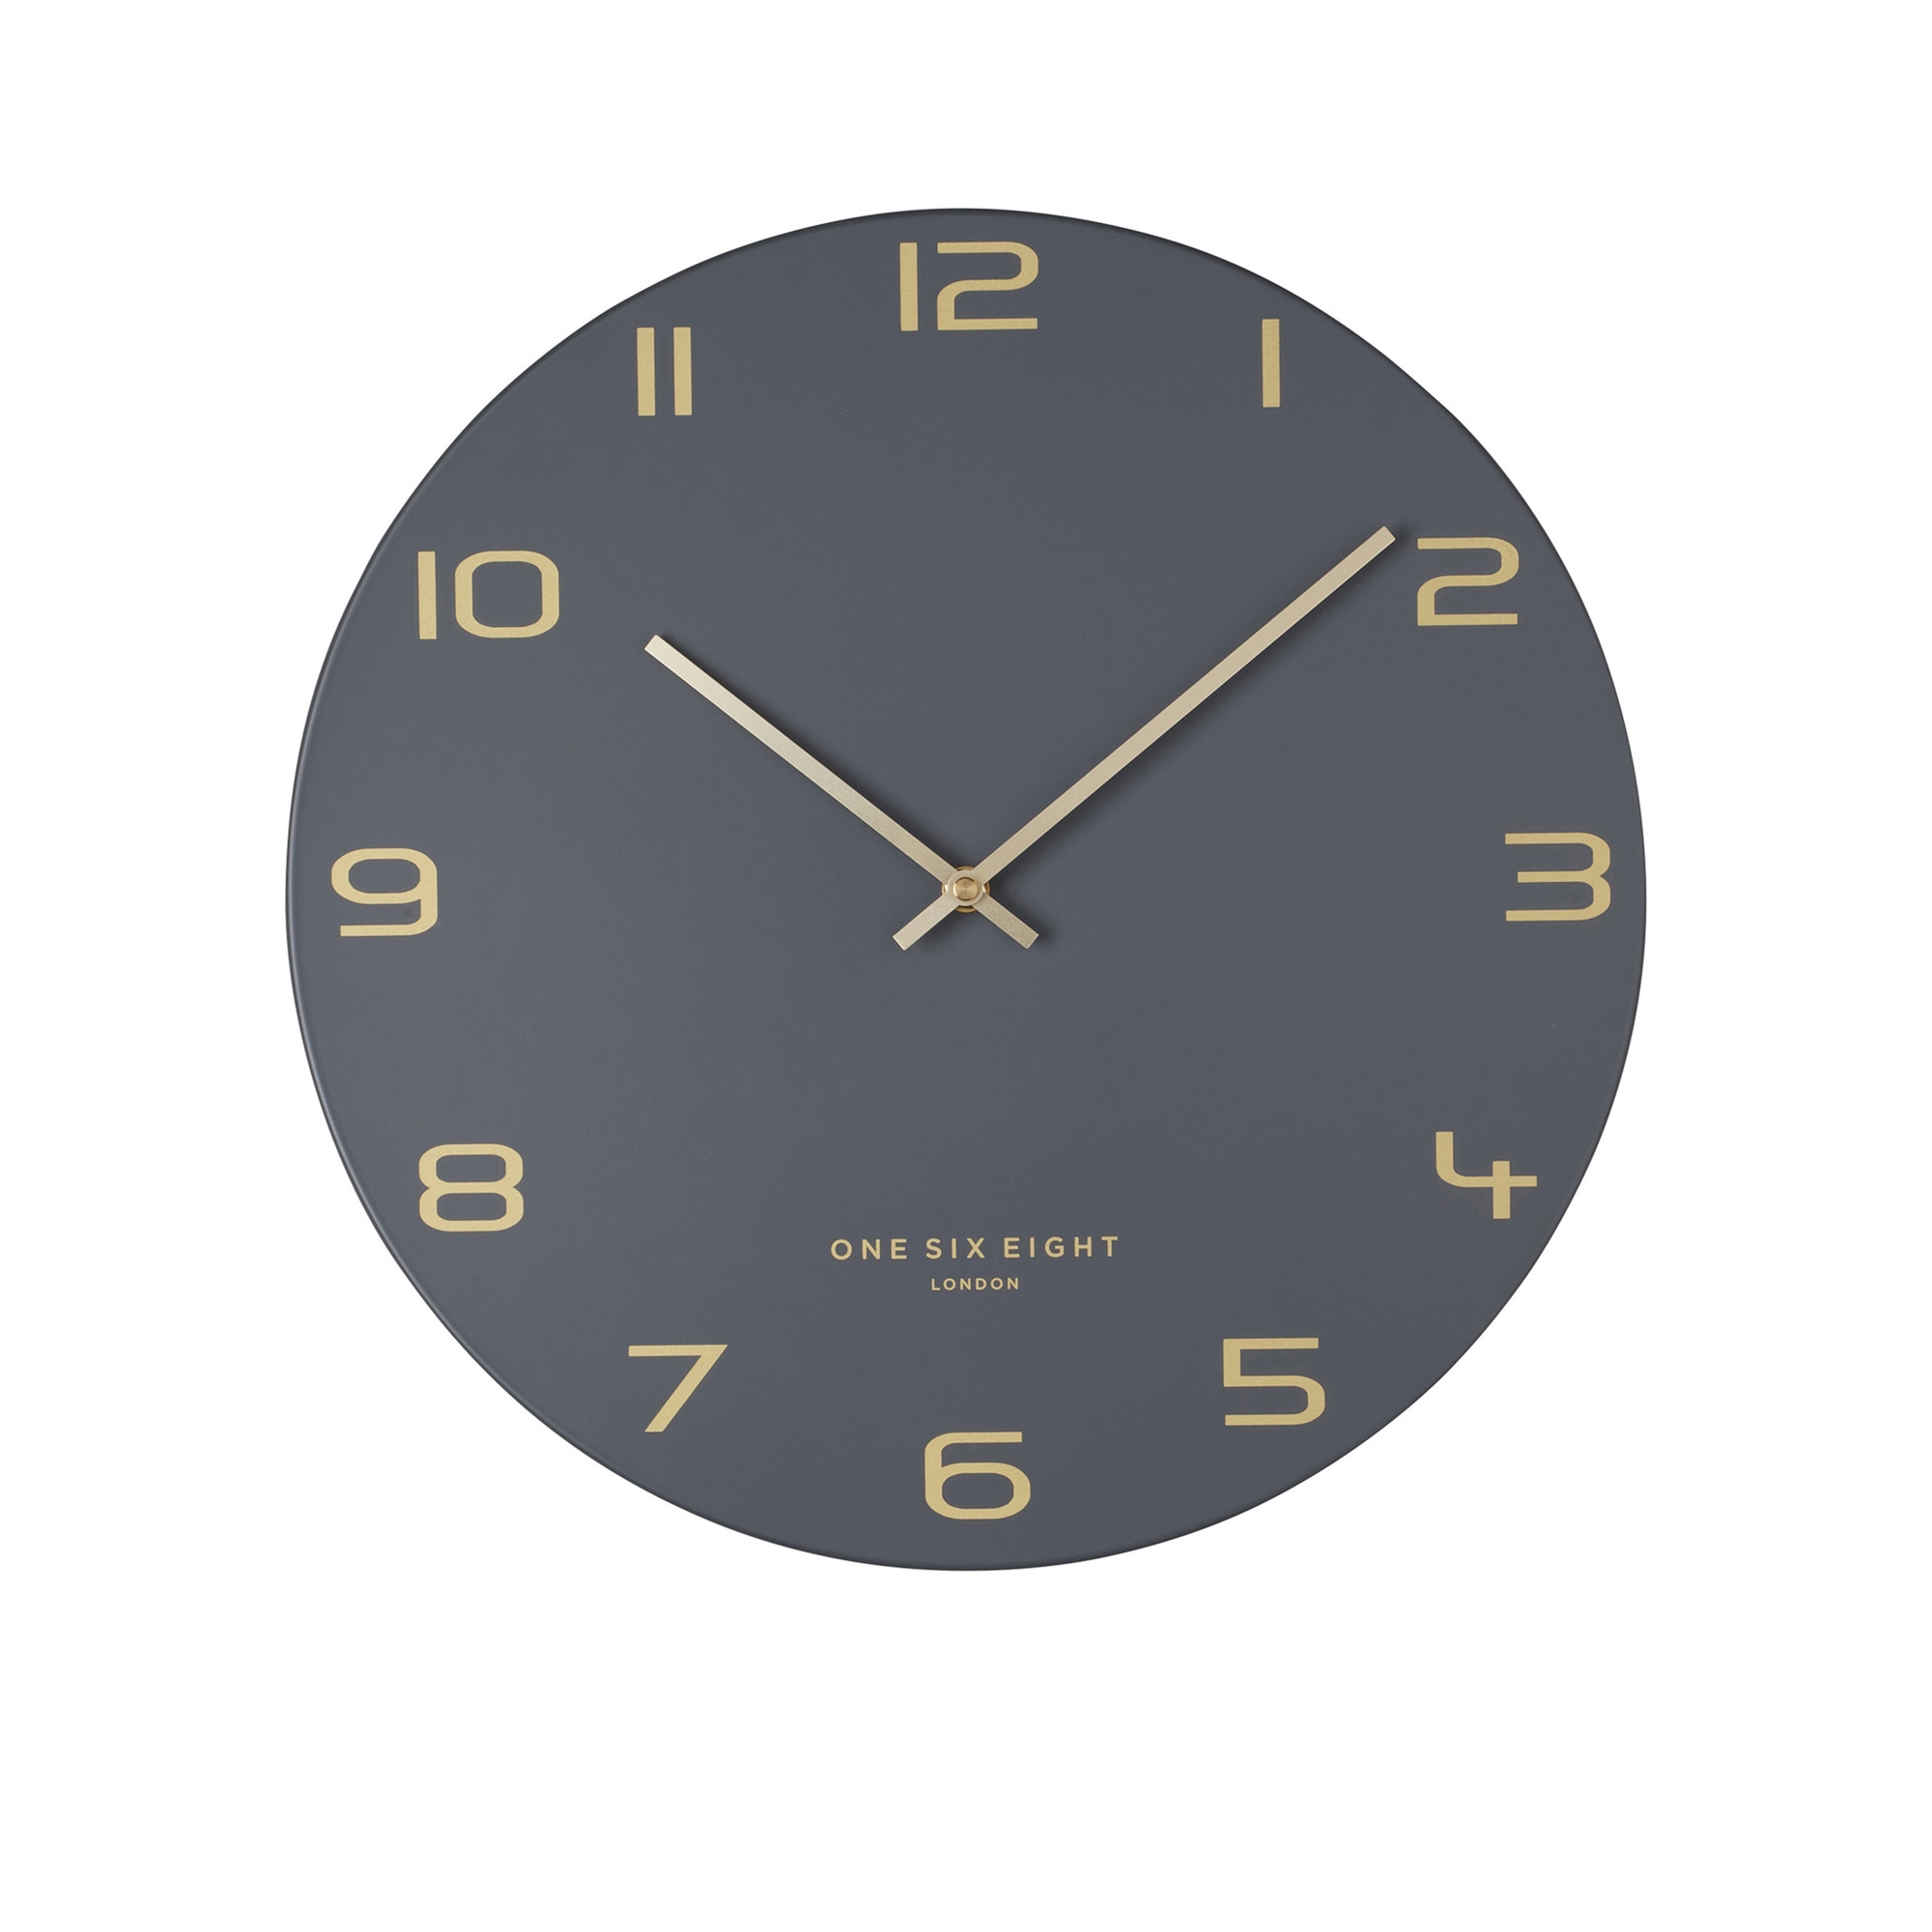 One Six Eight London Blake Silent Wall Clock 40cm Charcoal Grey Image 1